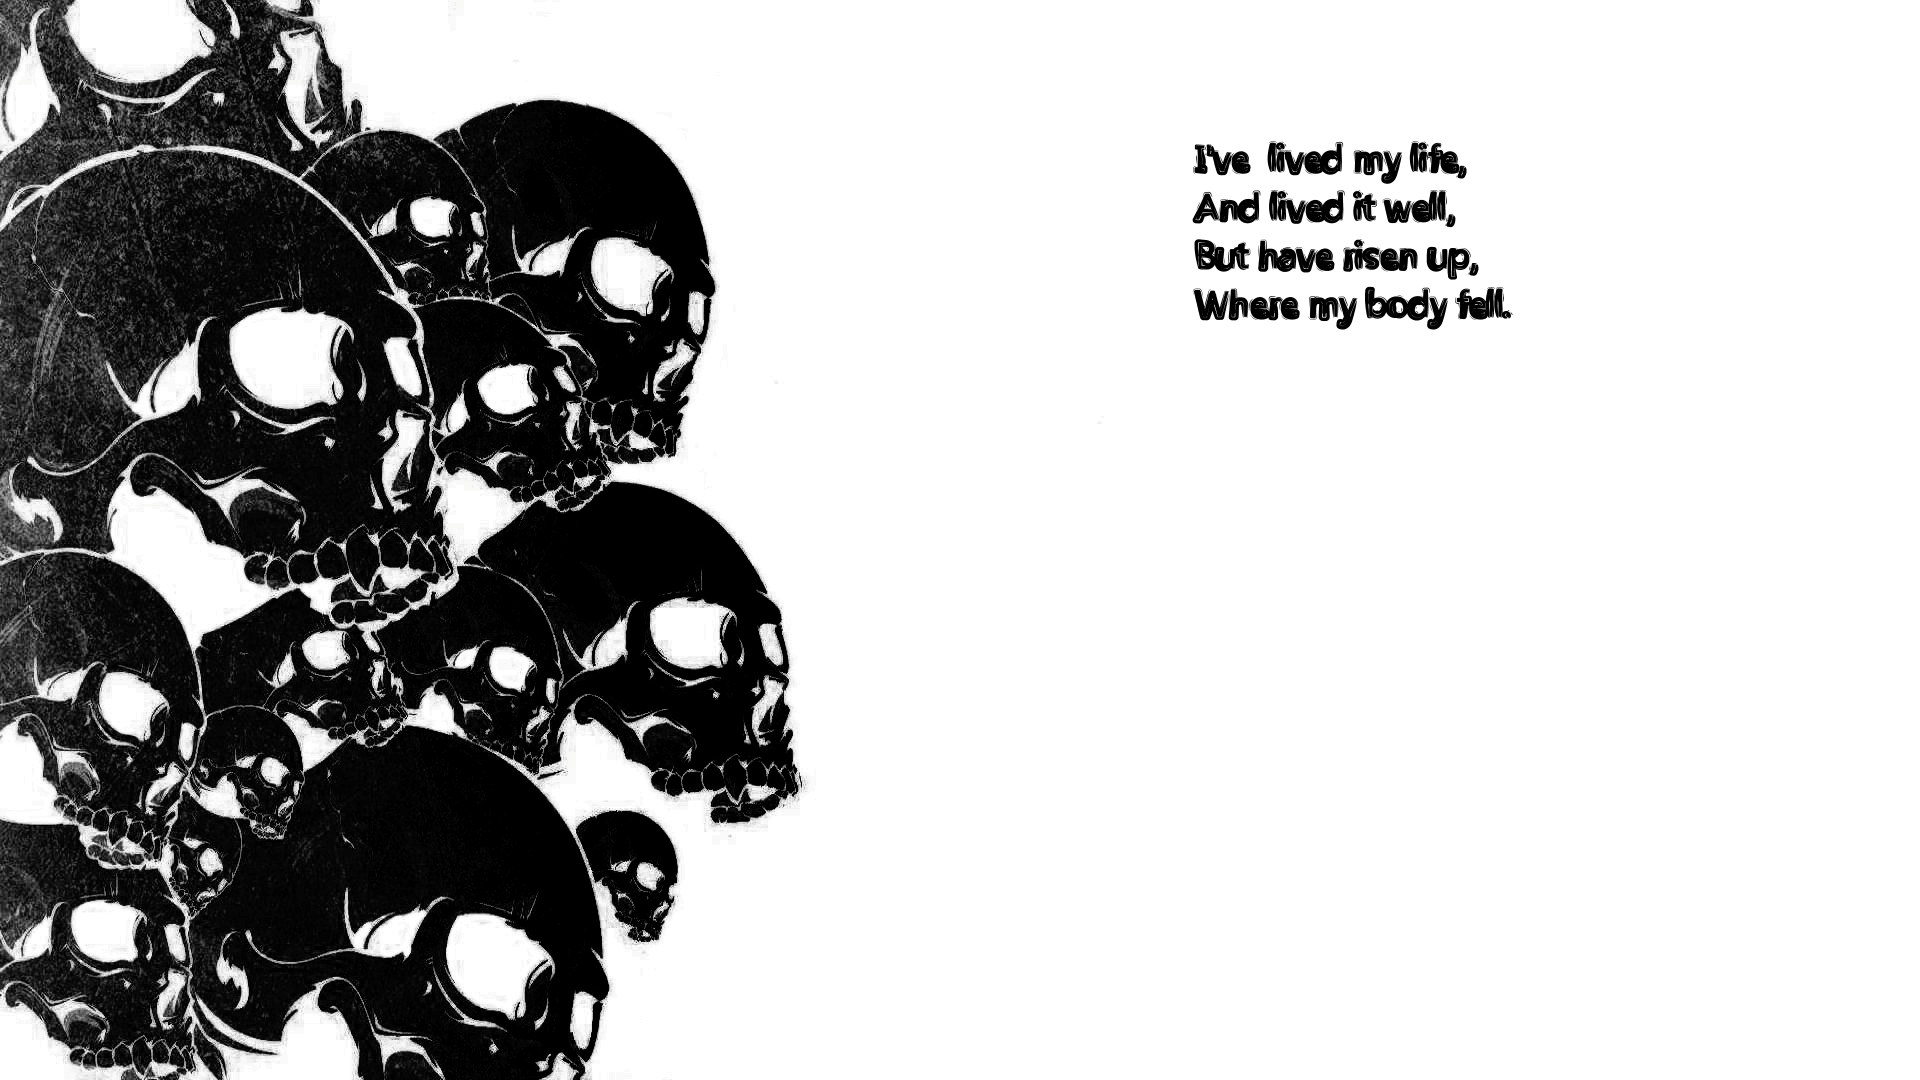 dark skull death life statement text quoate black white contrast